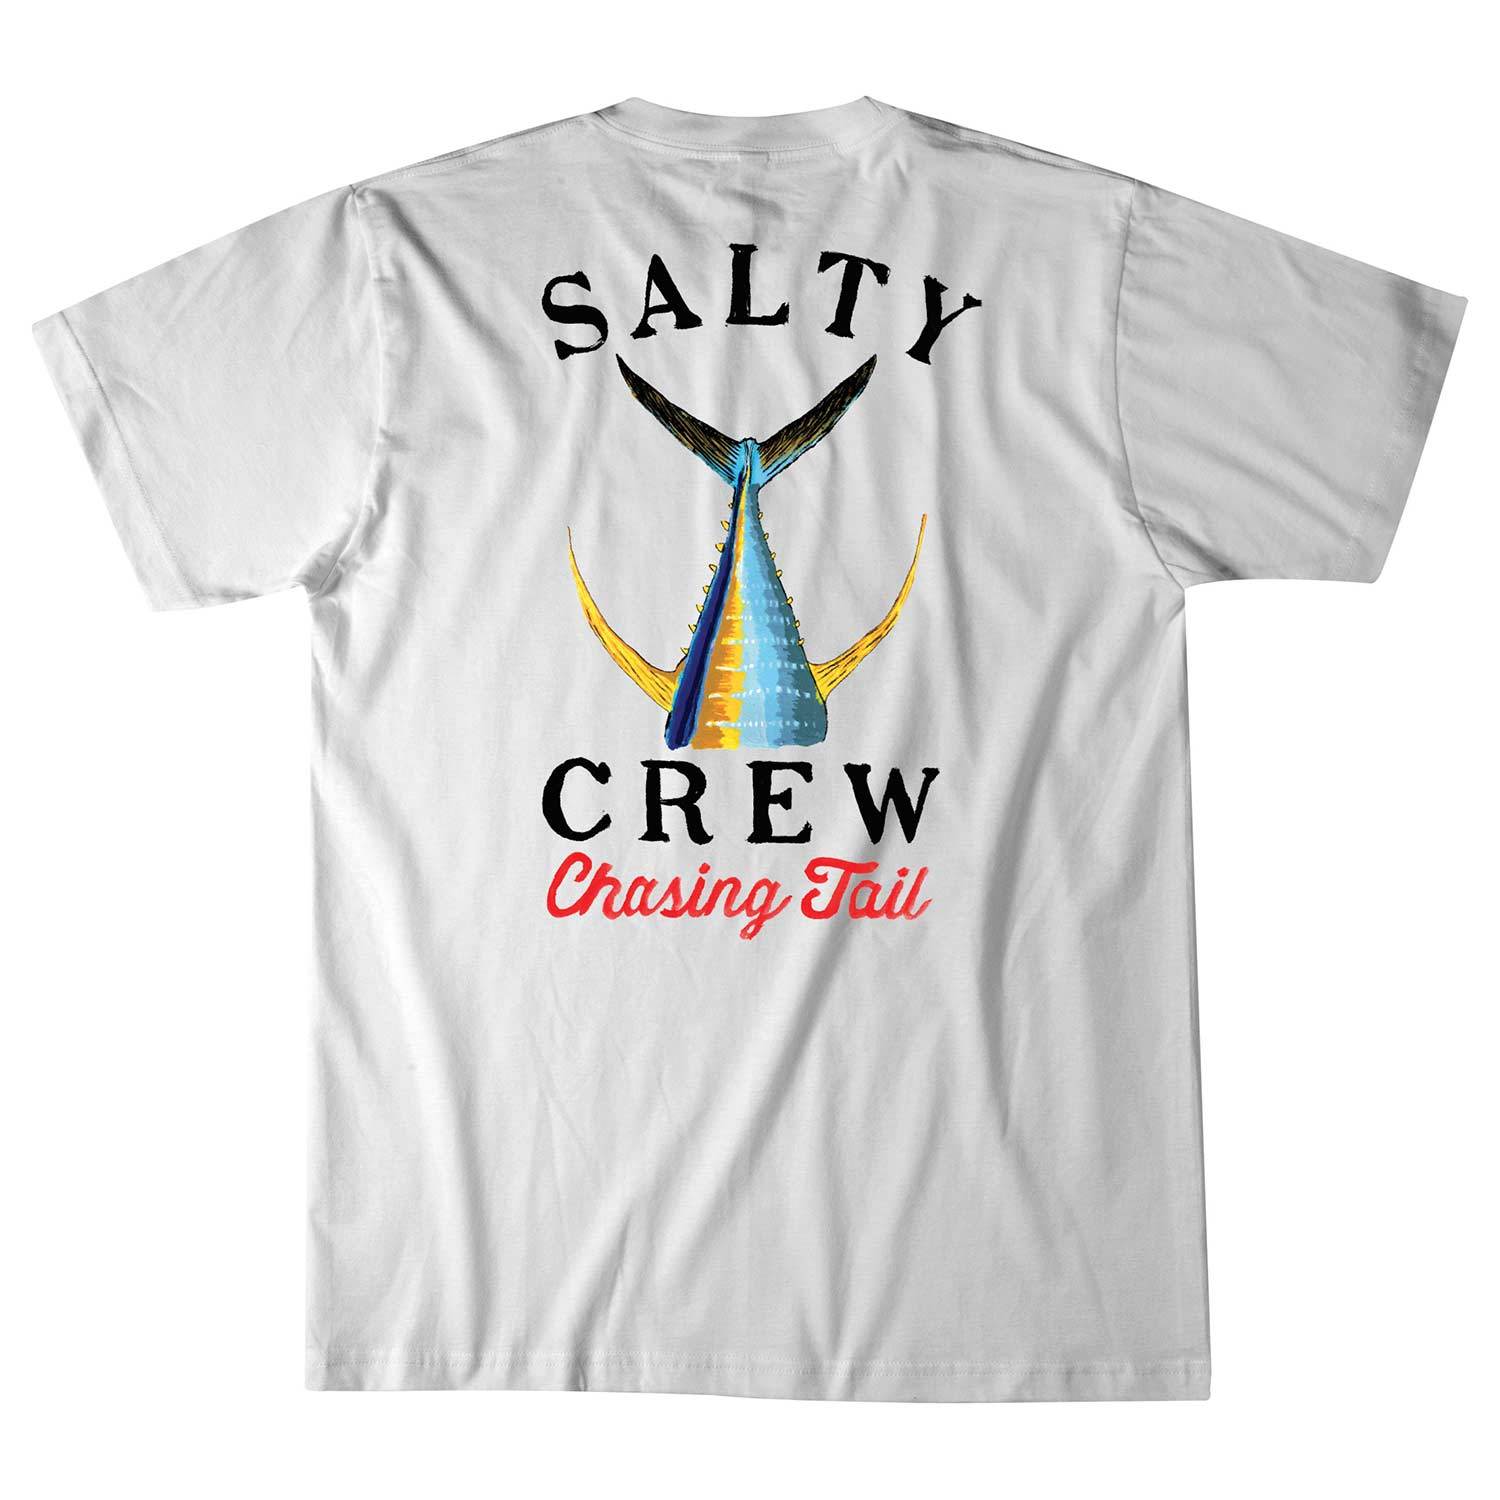 SALTY CREW Men's Tailed Shirt | West Marine